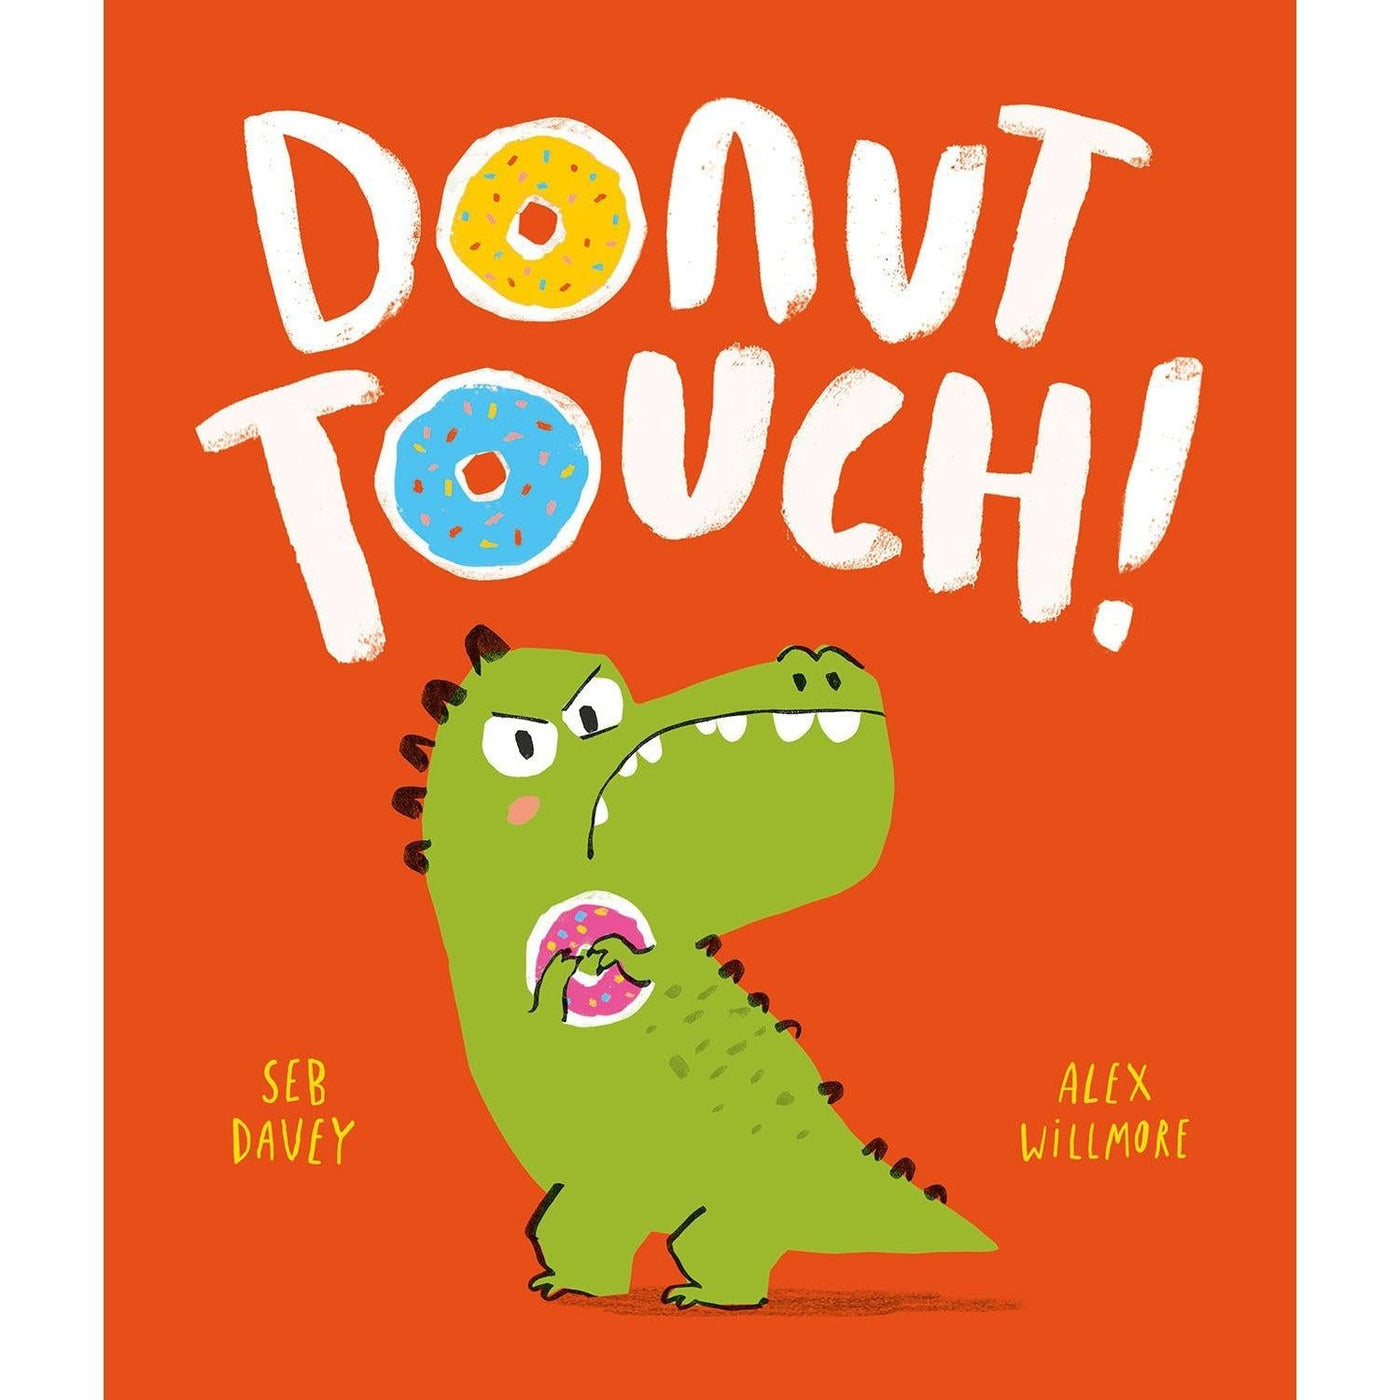 Donut Touch! - Seb Davey & Alex Willmore